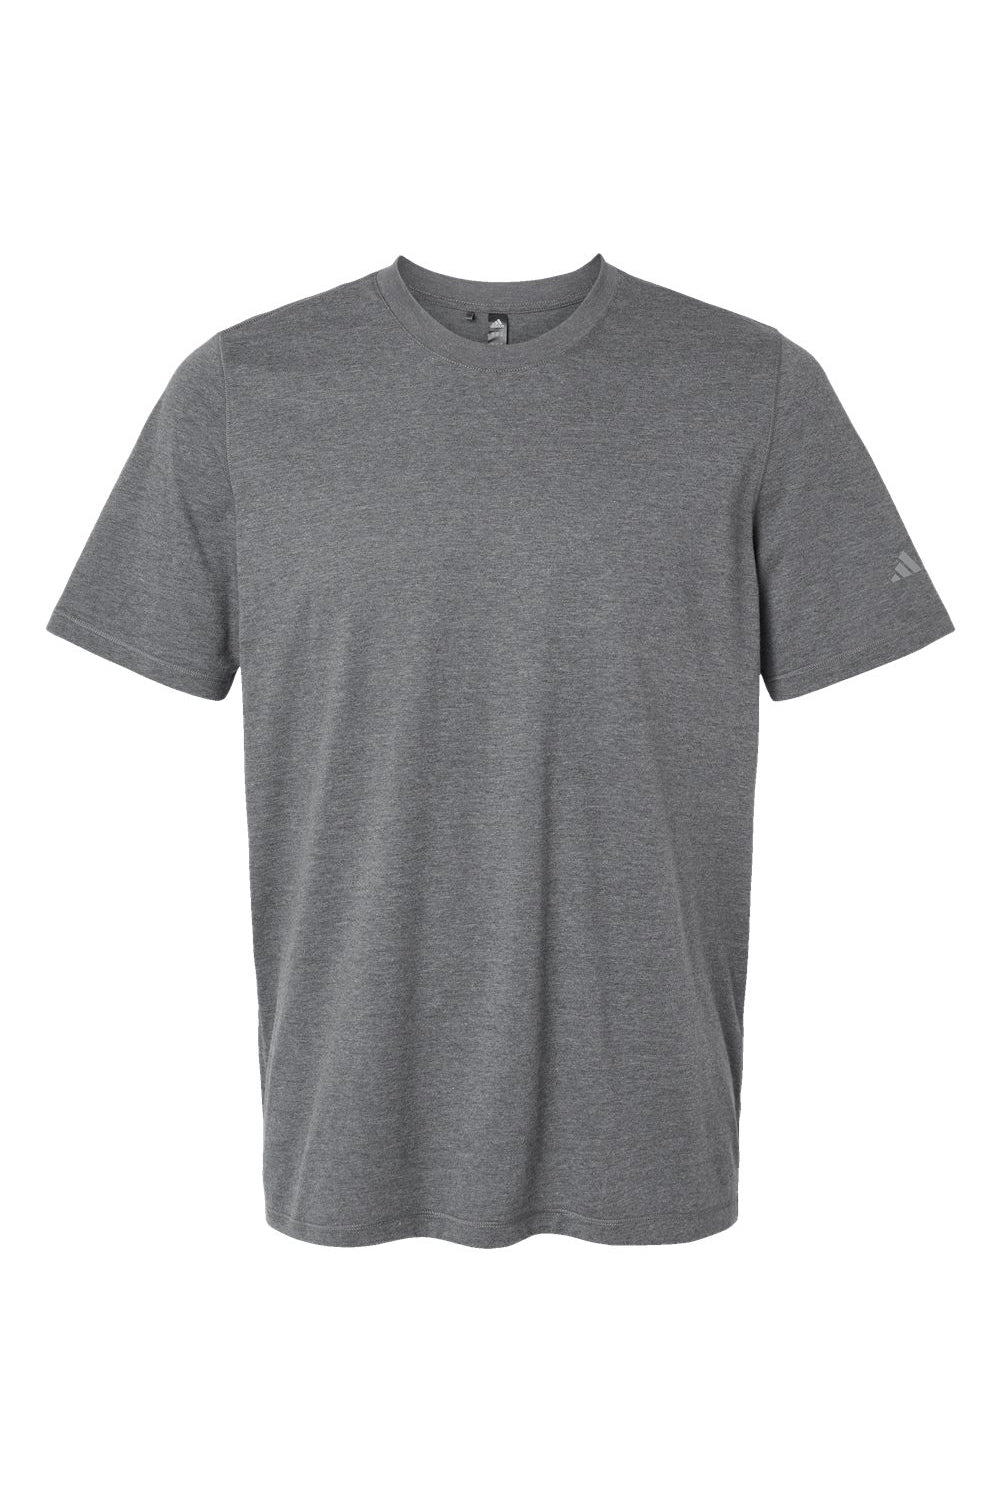 Adidas A556 Mens Short Sleeve Crewneck T-Shirt Heather Dark Grey Flat Front